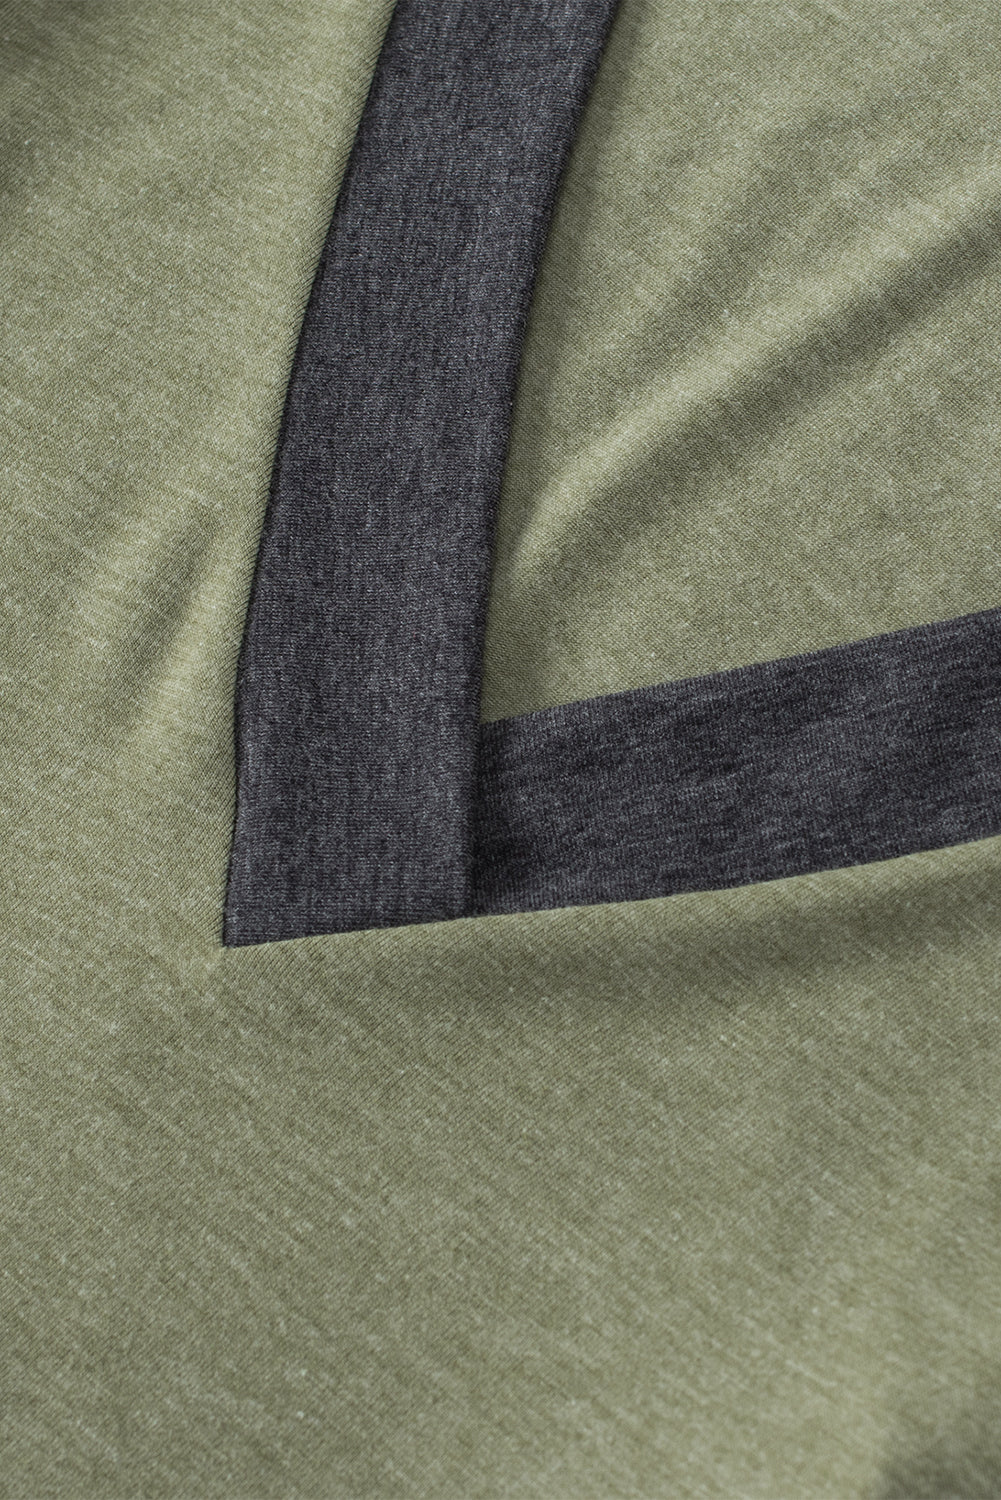 Khaki Contrast V Neck Button Cuffed Long Sleeve Top